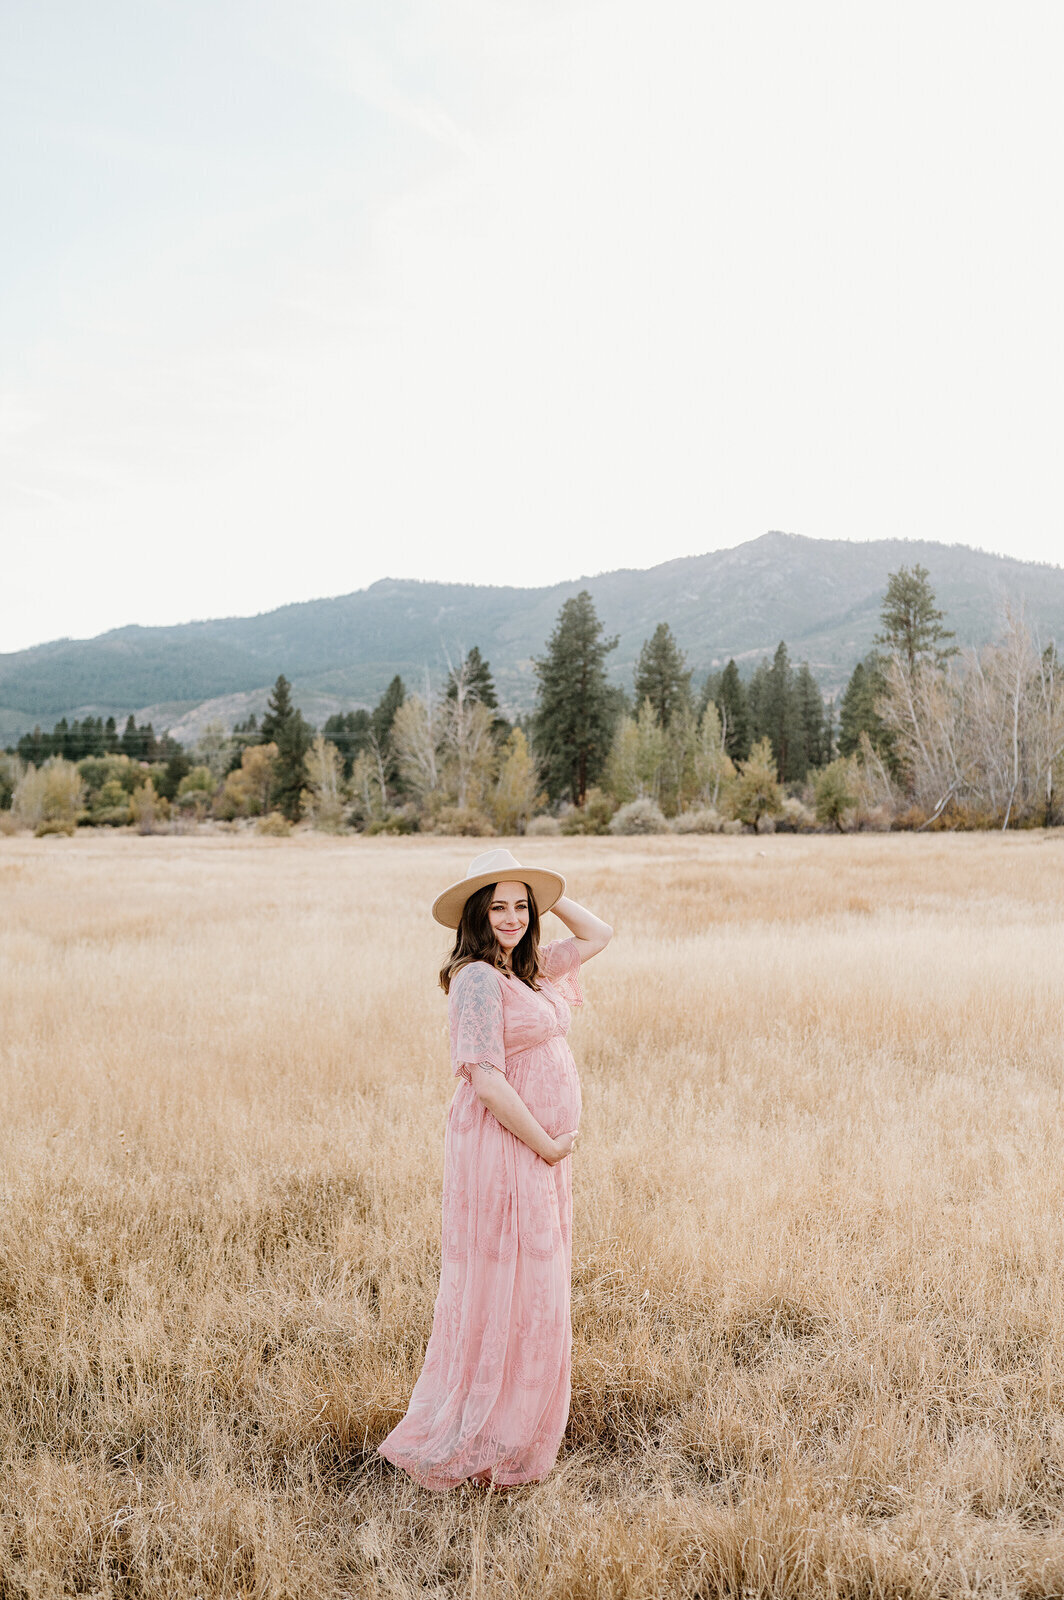 Pregnant woman feeling peaceful outdoors